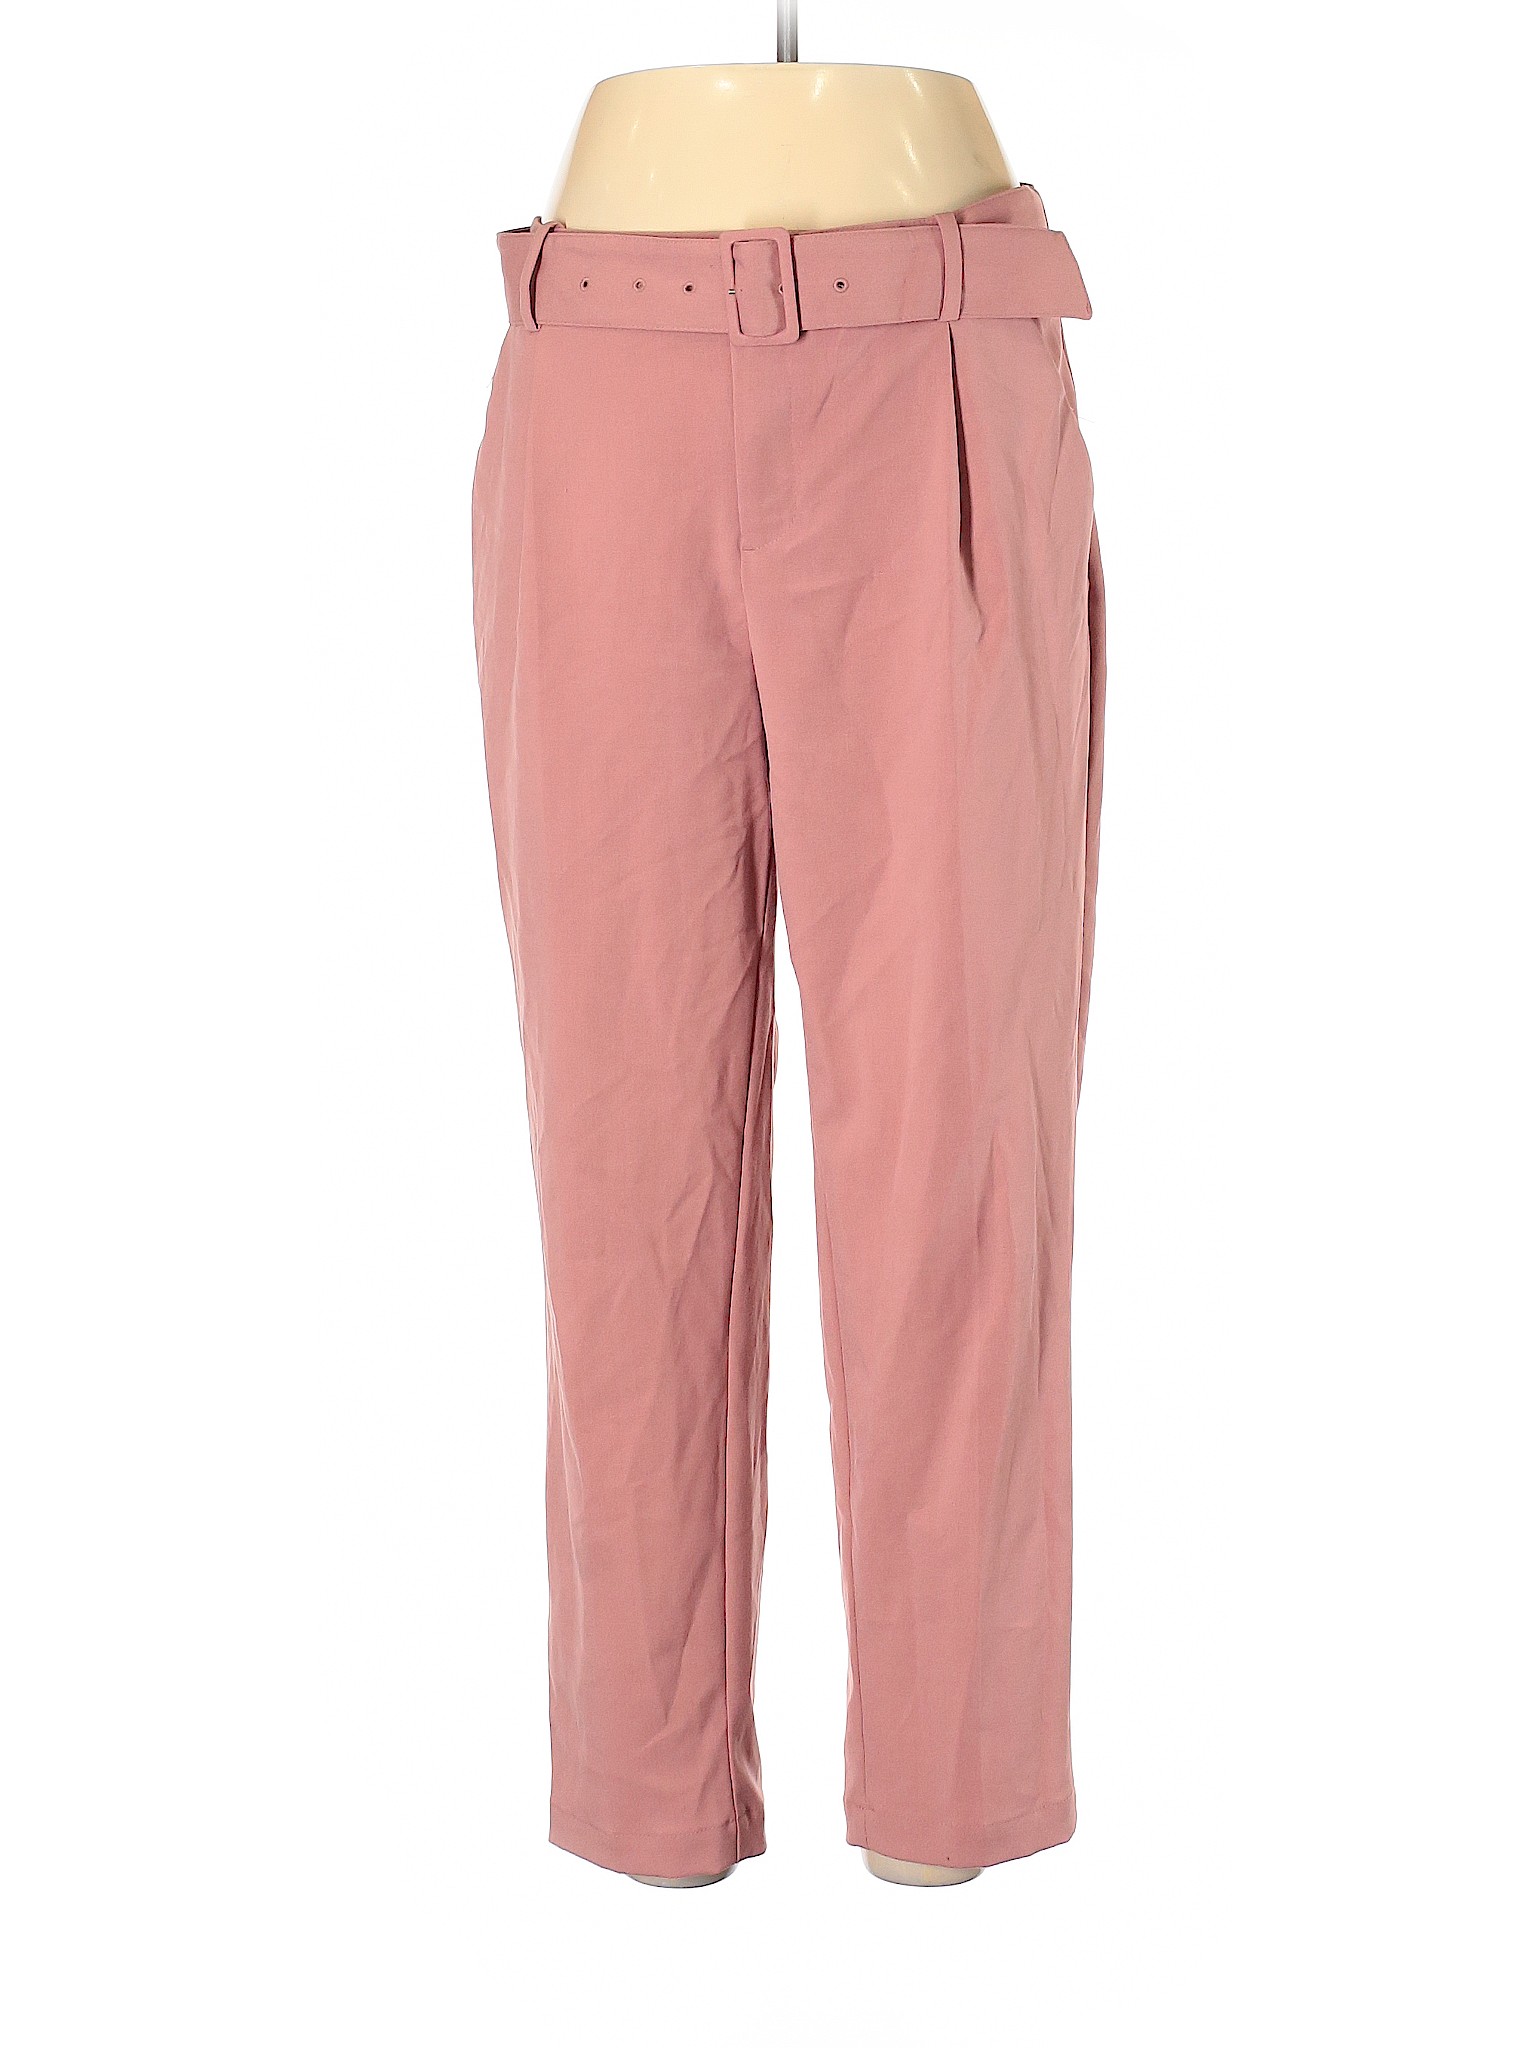 A New Day Women Pink Dress Pants 10 | eBay